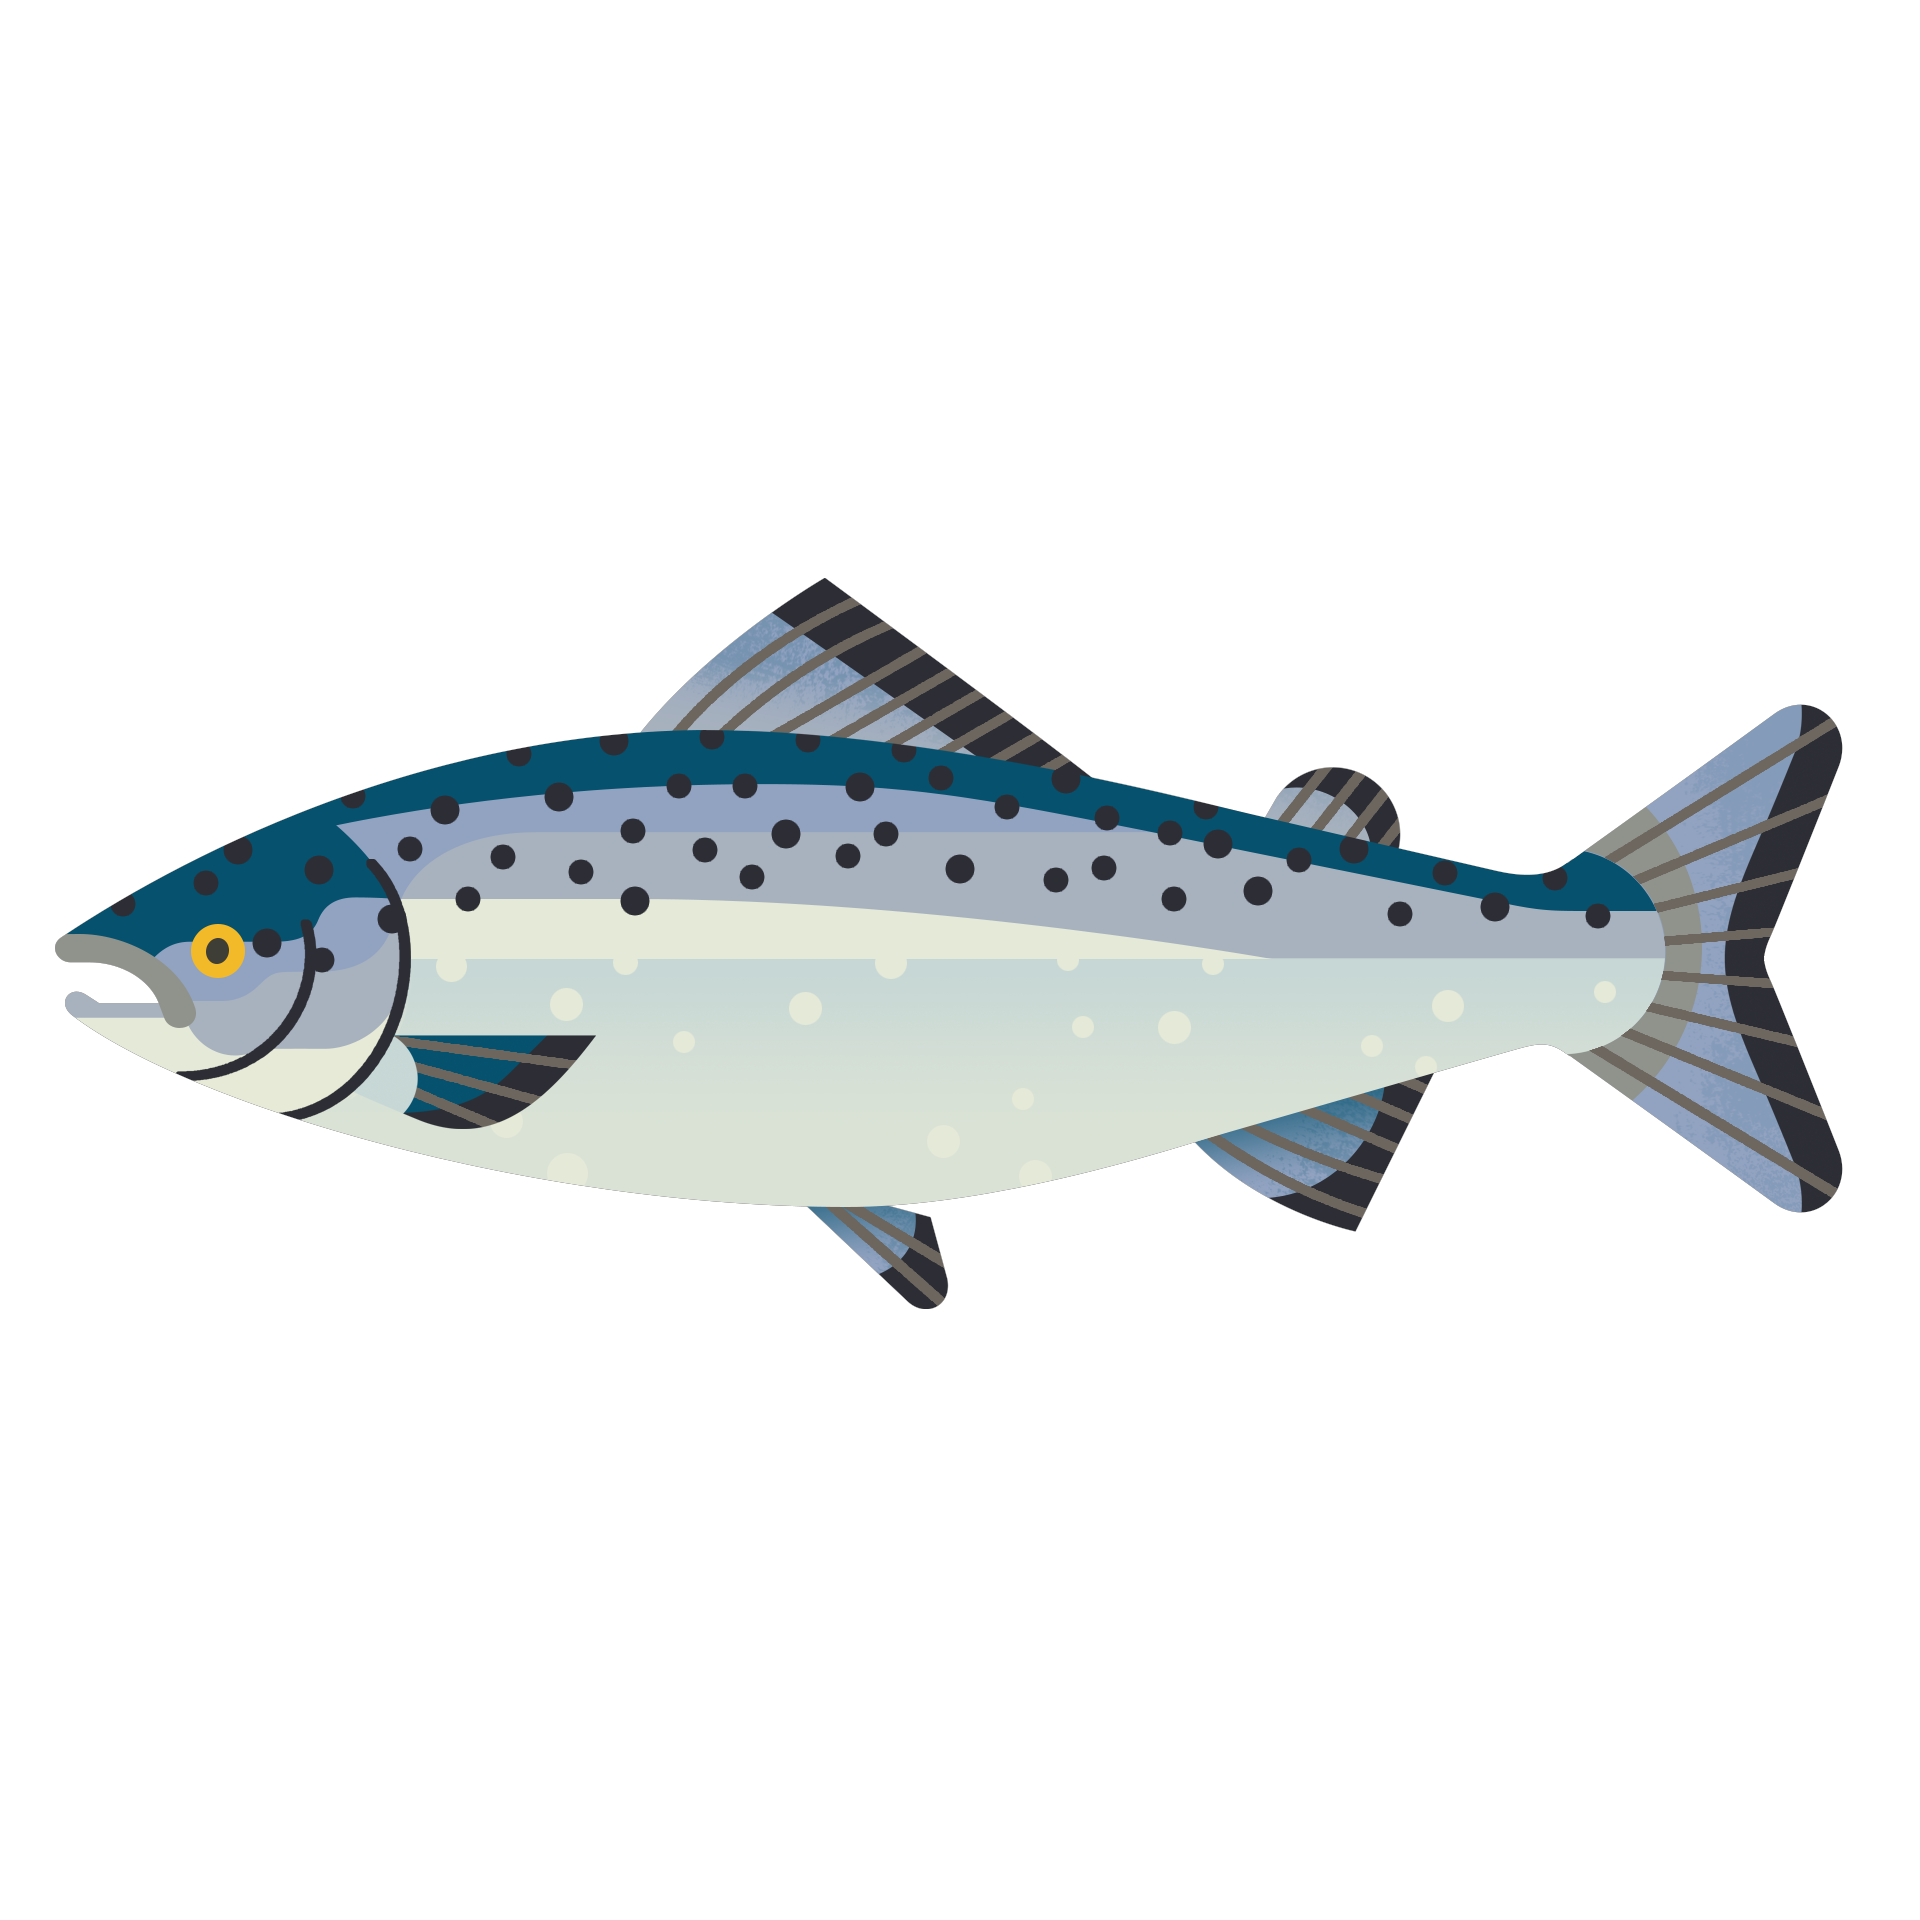 Tuna Fish Species Overview